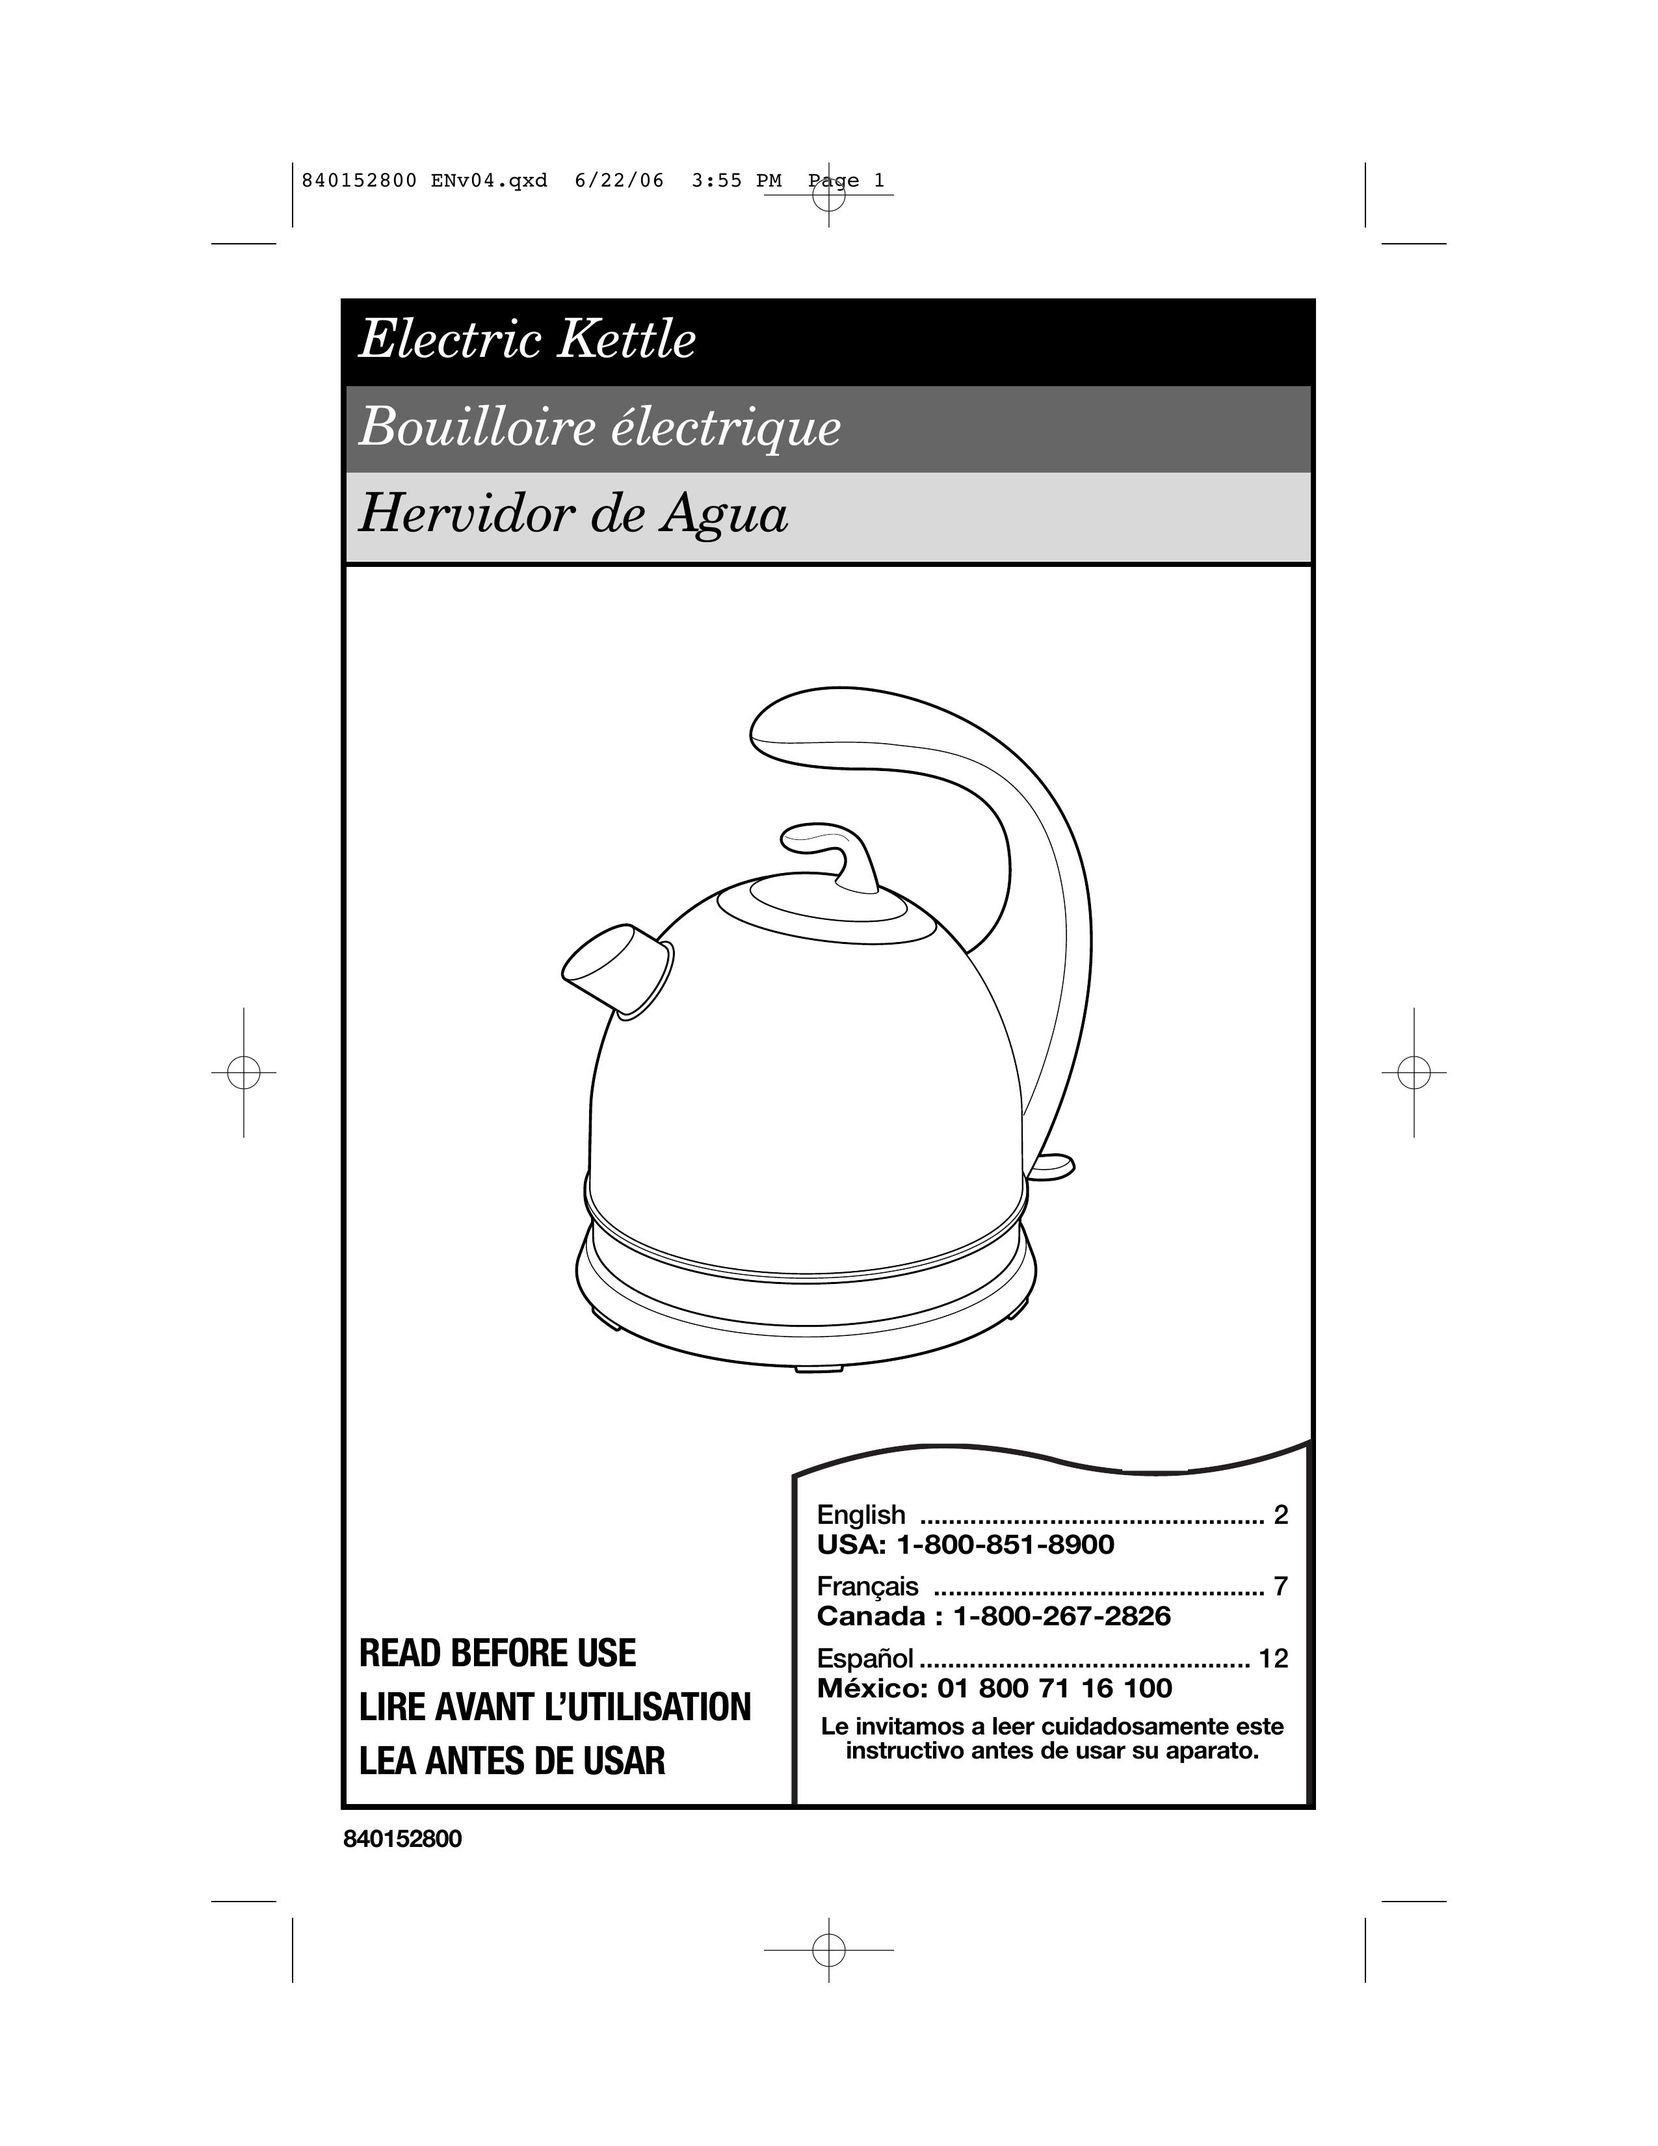 Hamilton Beach 168950 K14 Hot Beverage Maker User Manual